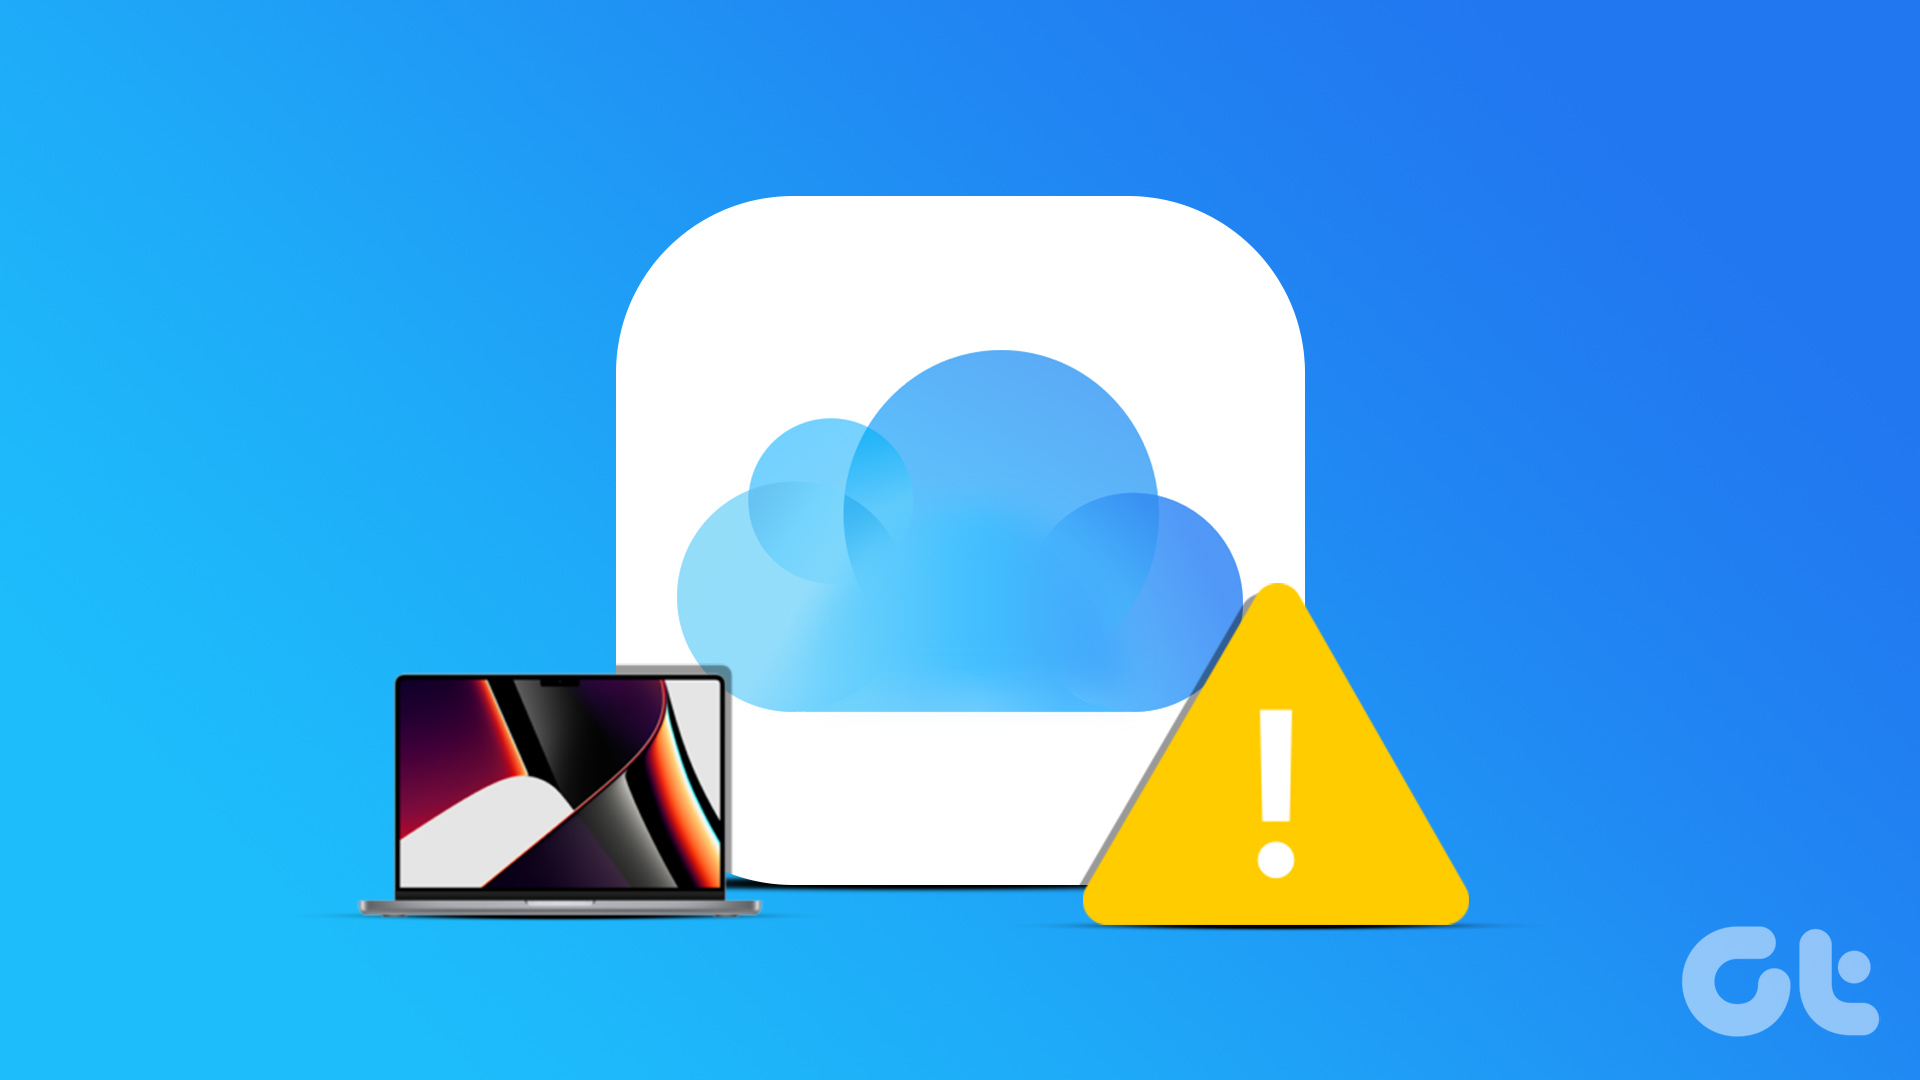 Mac에서 iCloud에 연결하는 중에 오류가 발생했습니다.